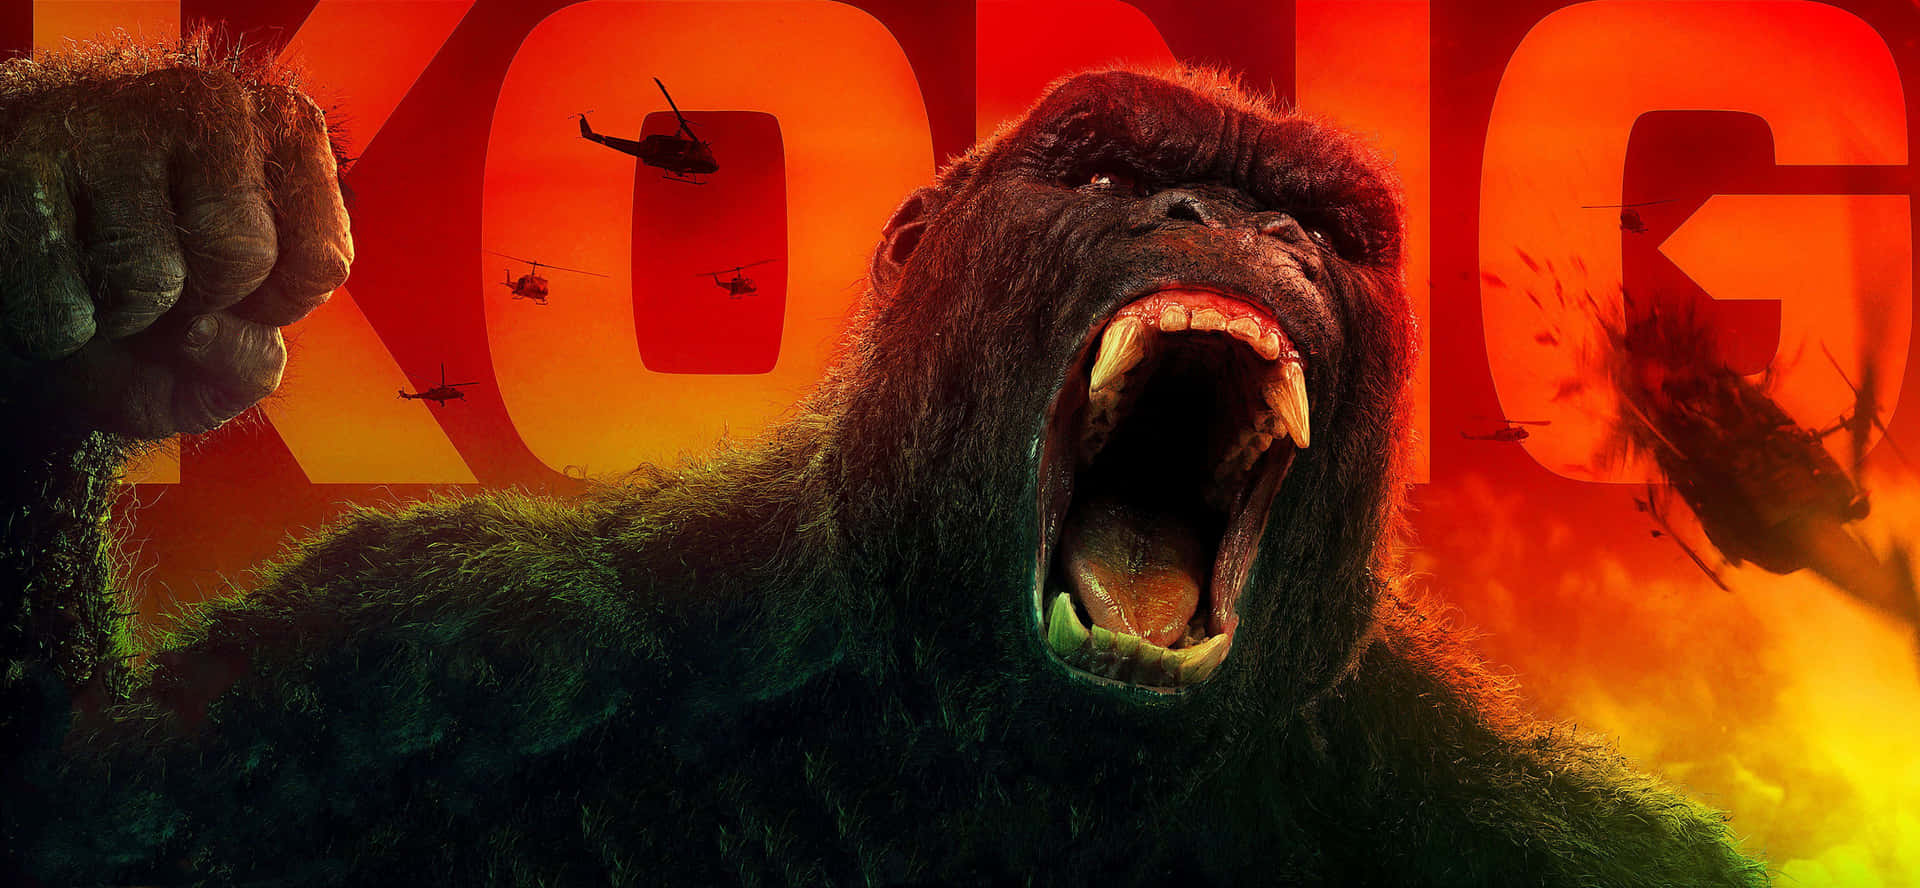 Unmomento Iconico - Il Leggendario King Kong.